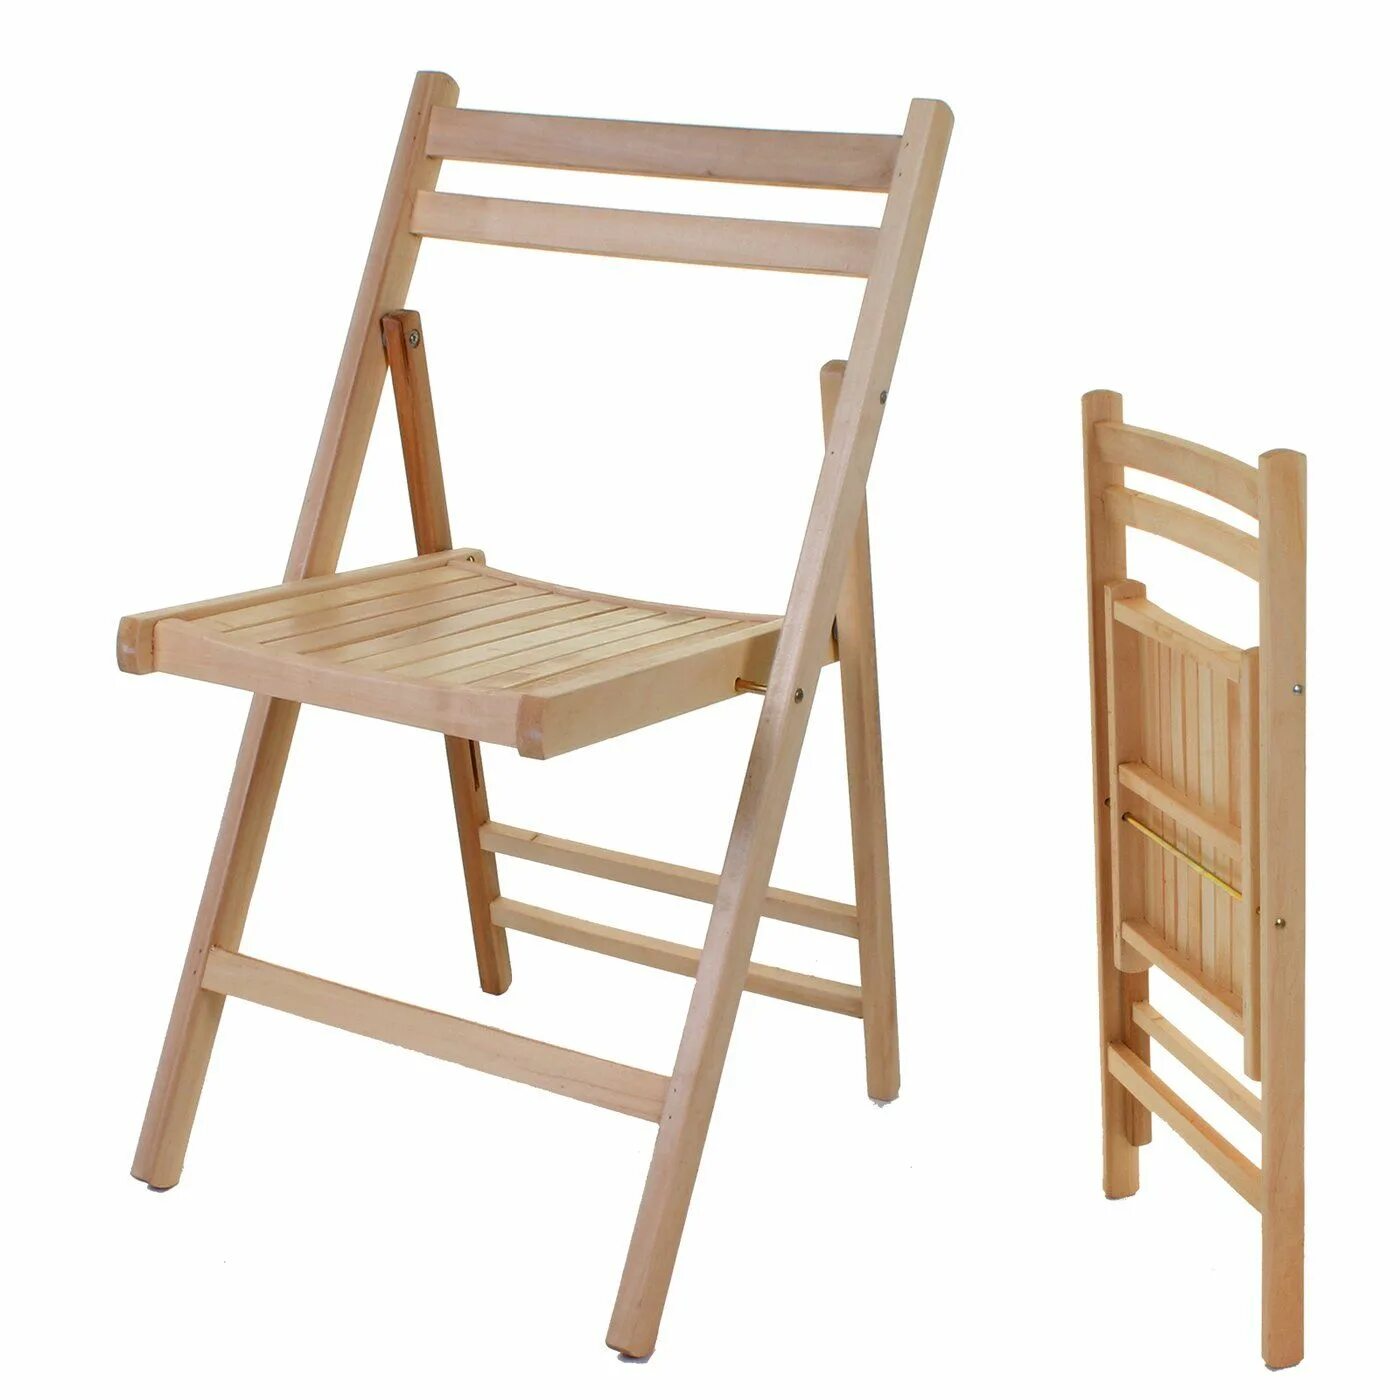 Стул «КОВЧЕГЪ» складной деревянный. Стул Chair (Чаир) раскладной. Складные стулья FSC Mix. Стул складной деревянный.